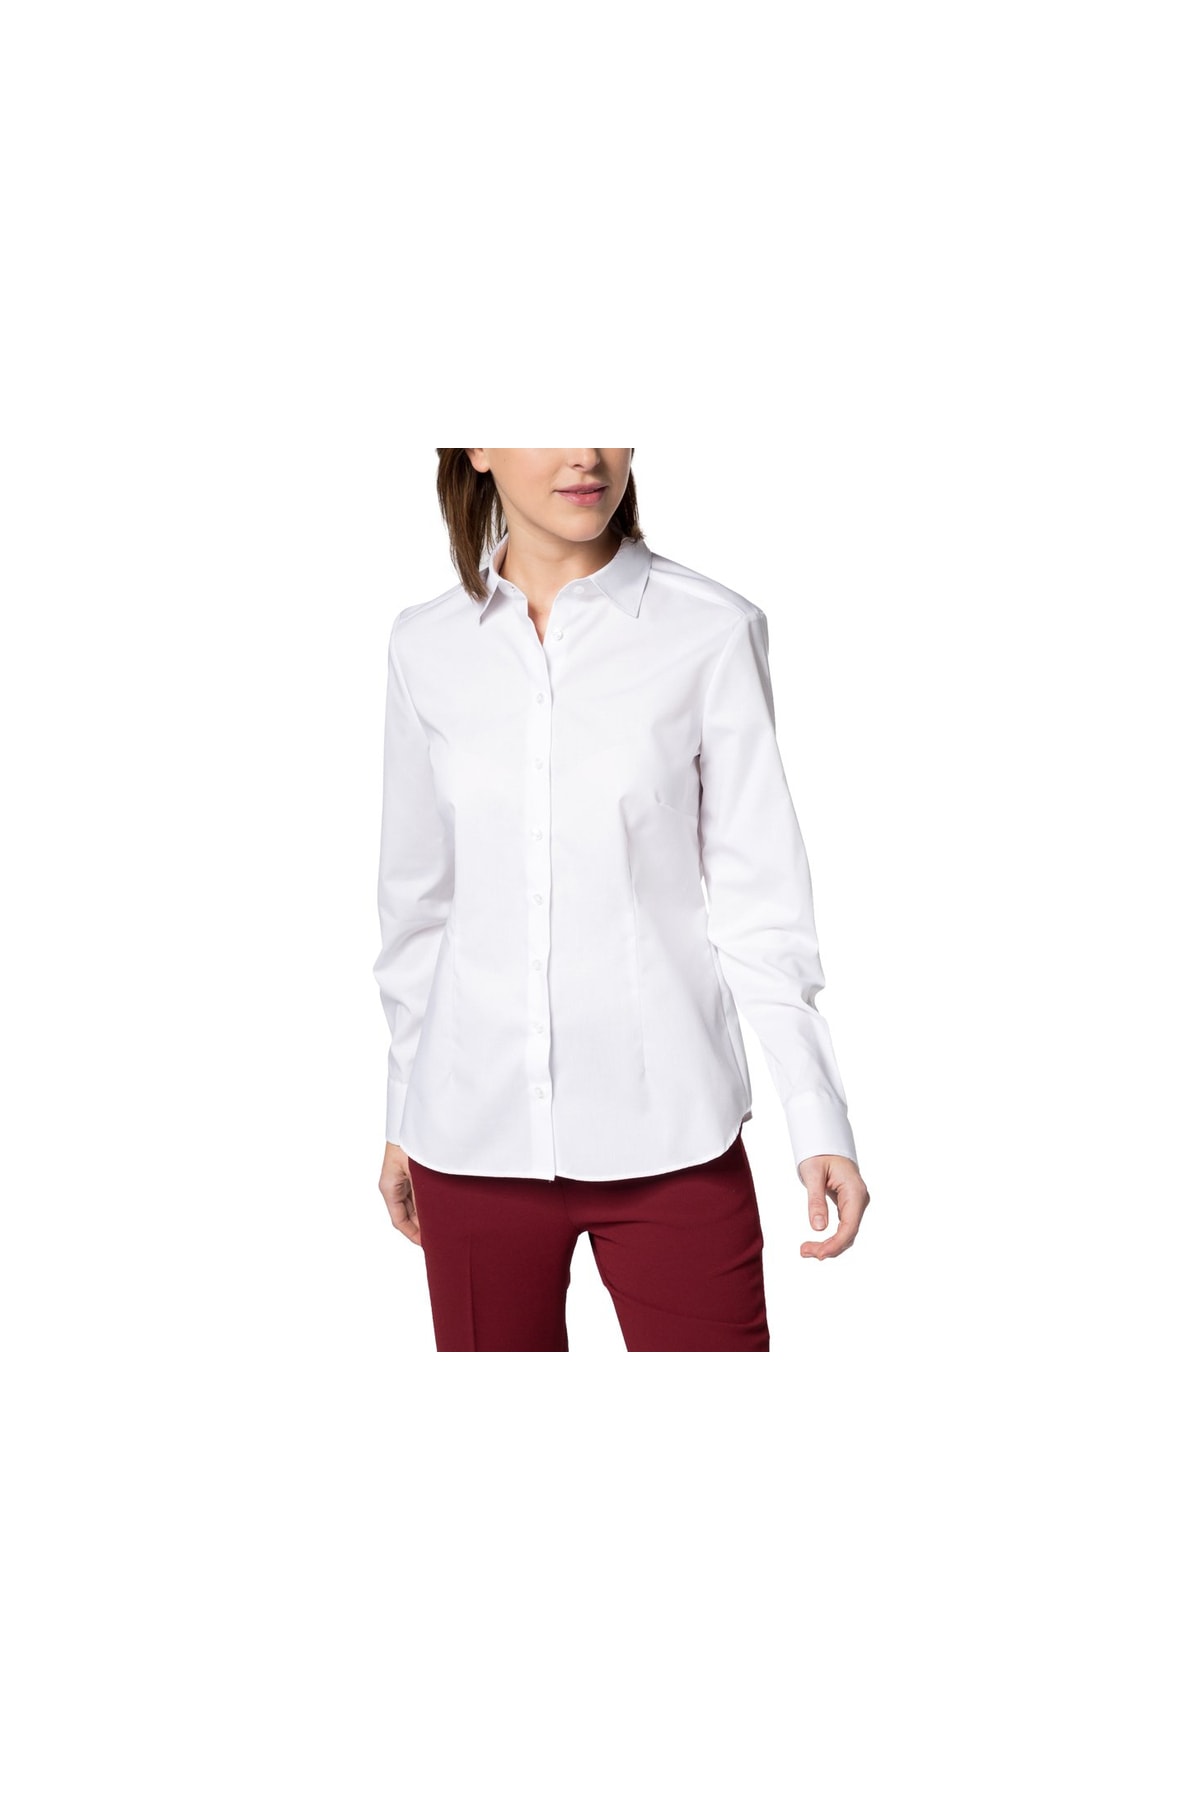 ETERNA Bluse Weiß Regular Fit Fast ausverkauft